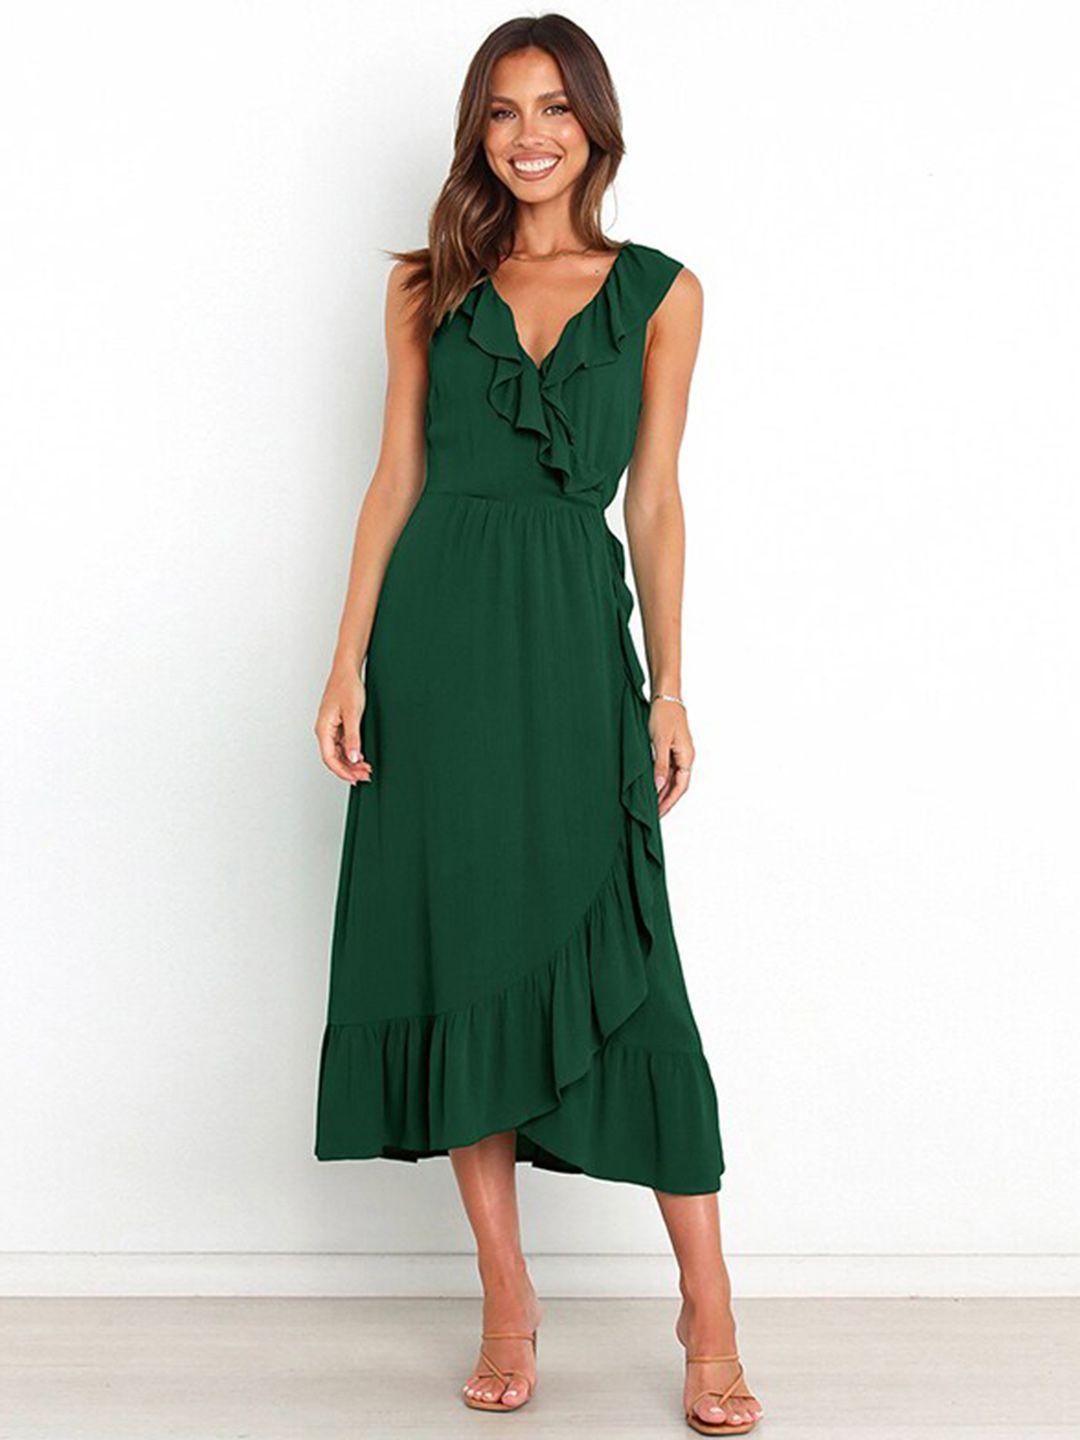 stylecast green & teal green ruffled midi dress